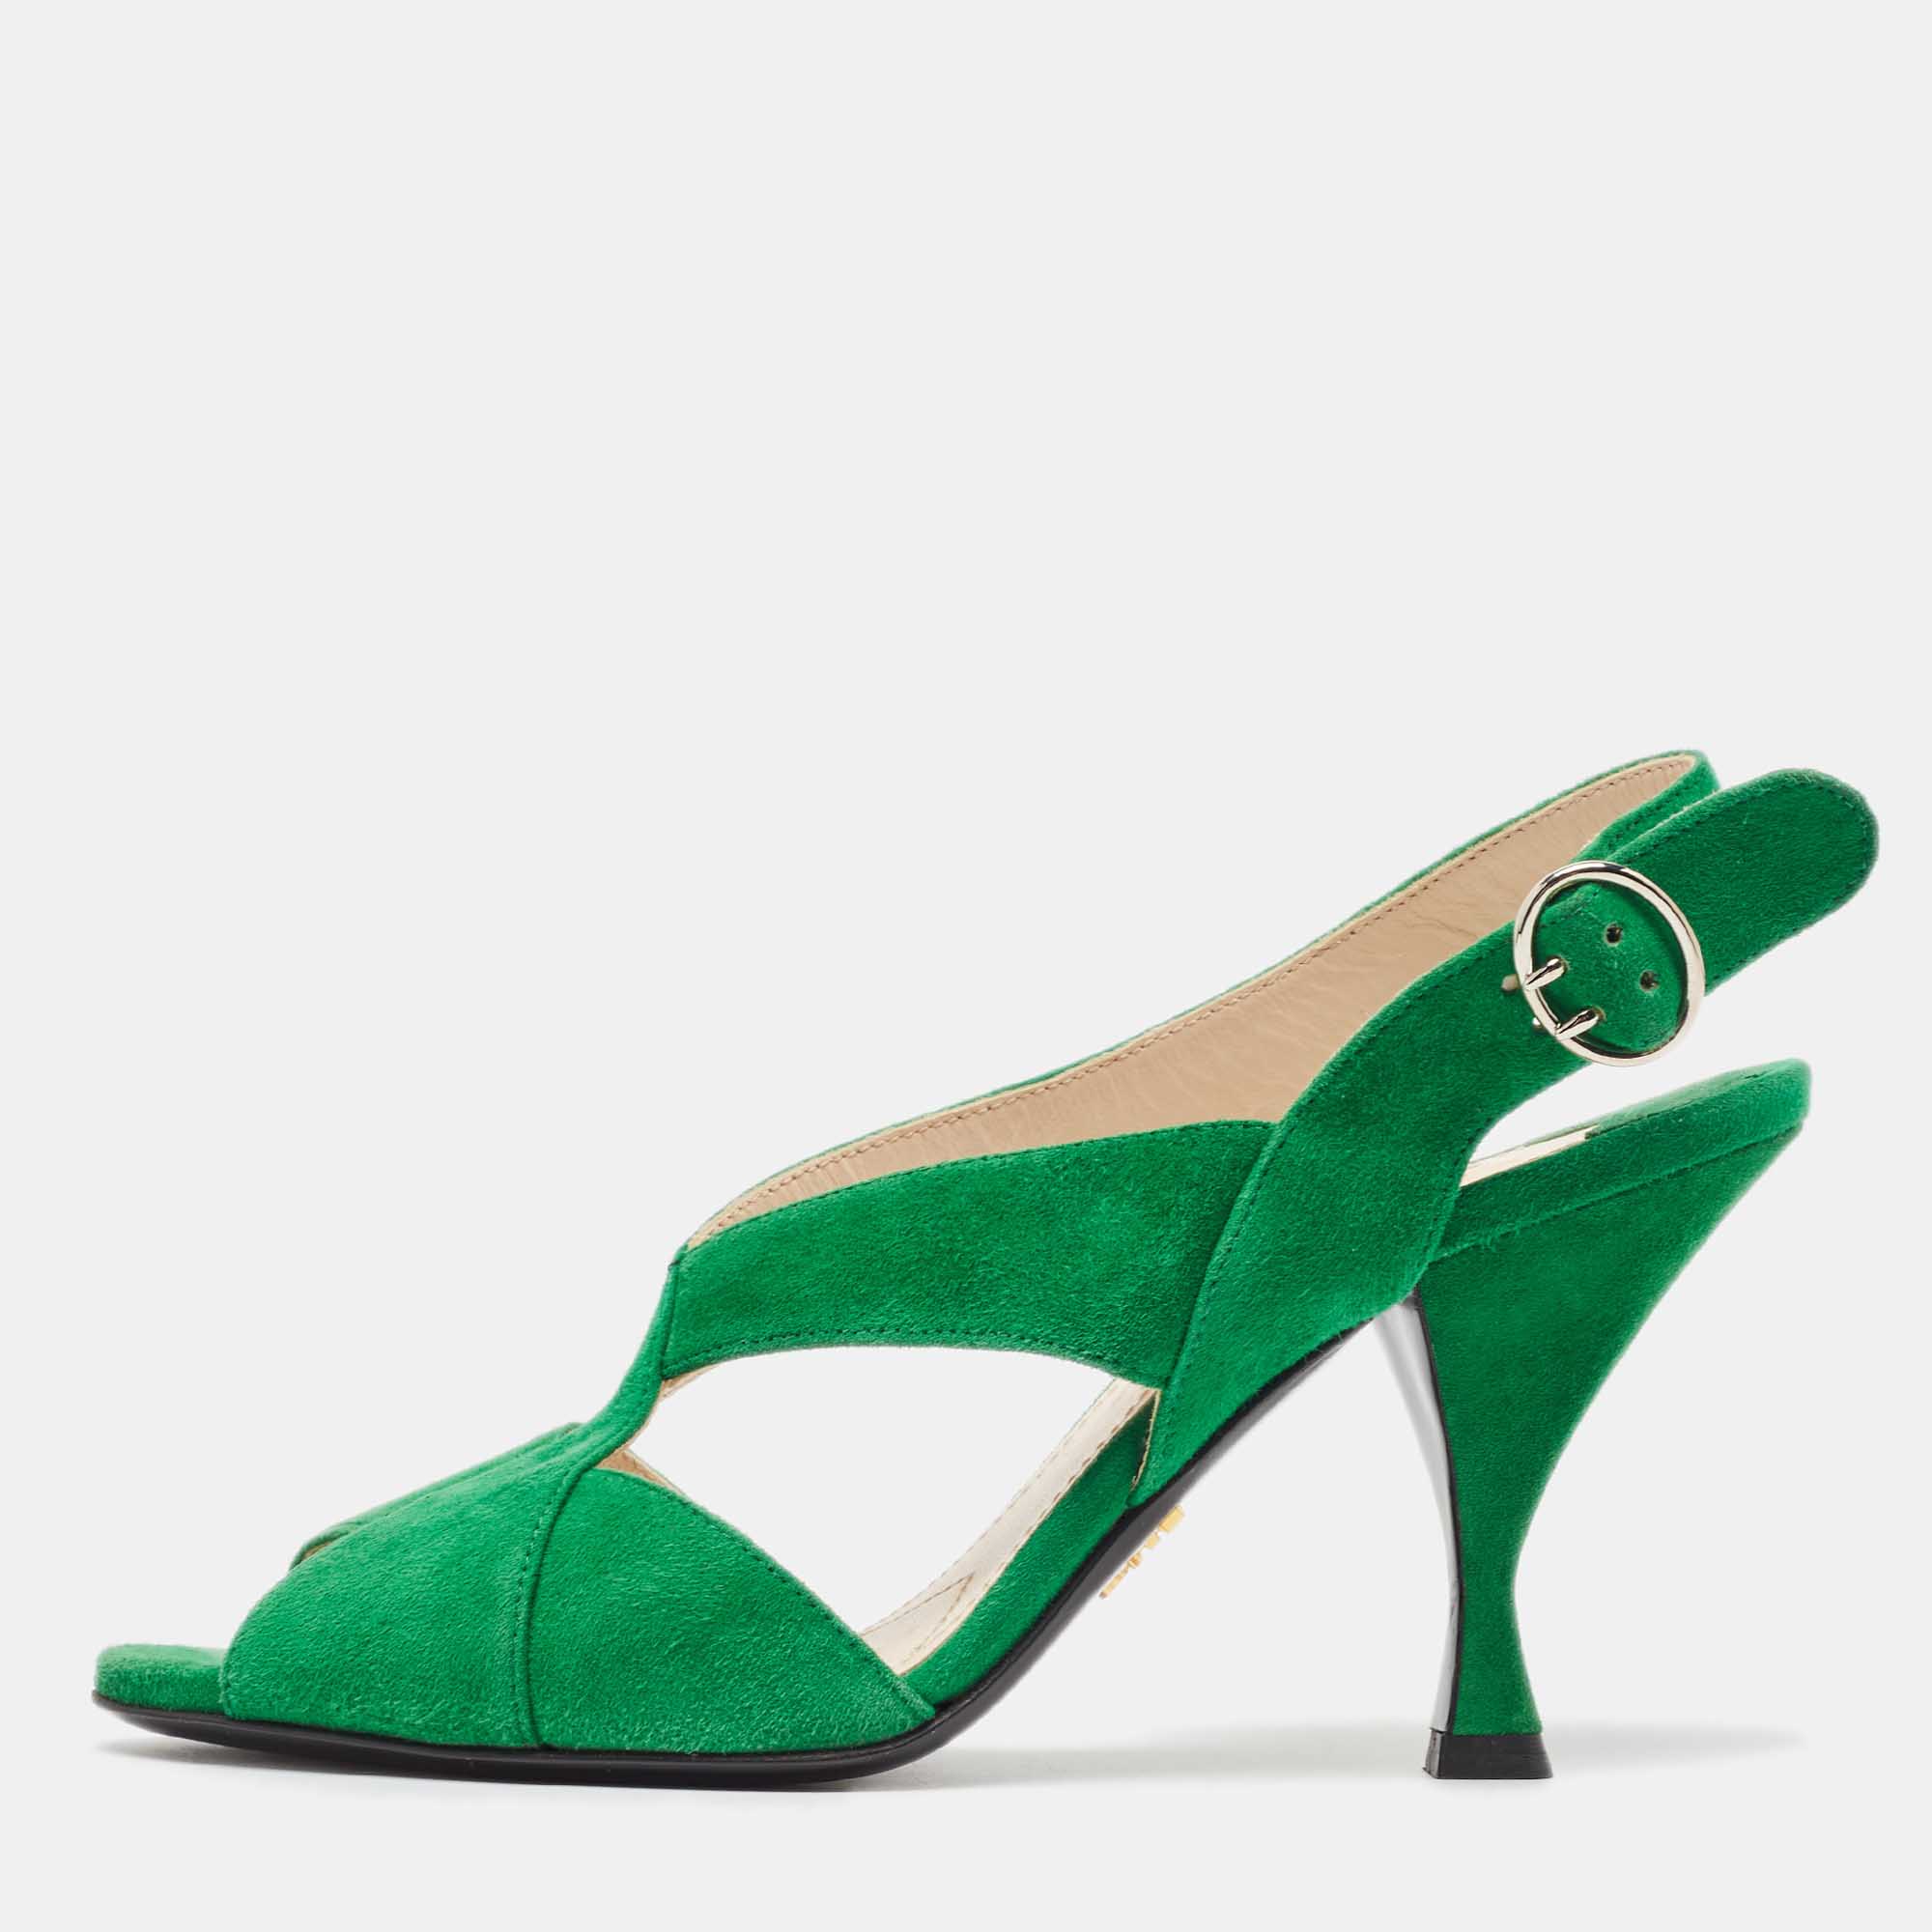 Prada Green Suede Slingback Sandals Size 37